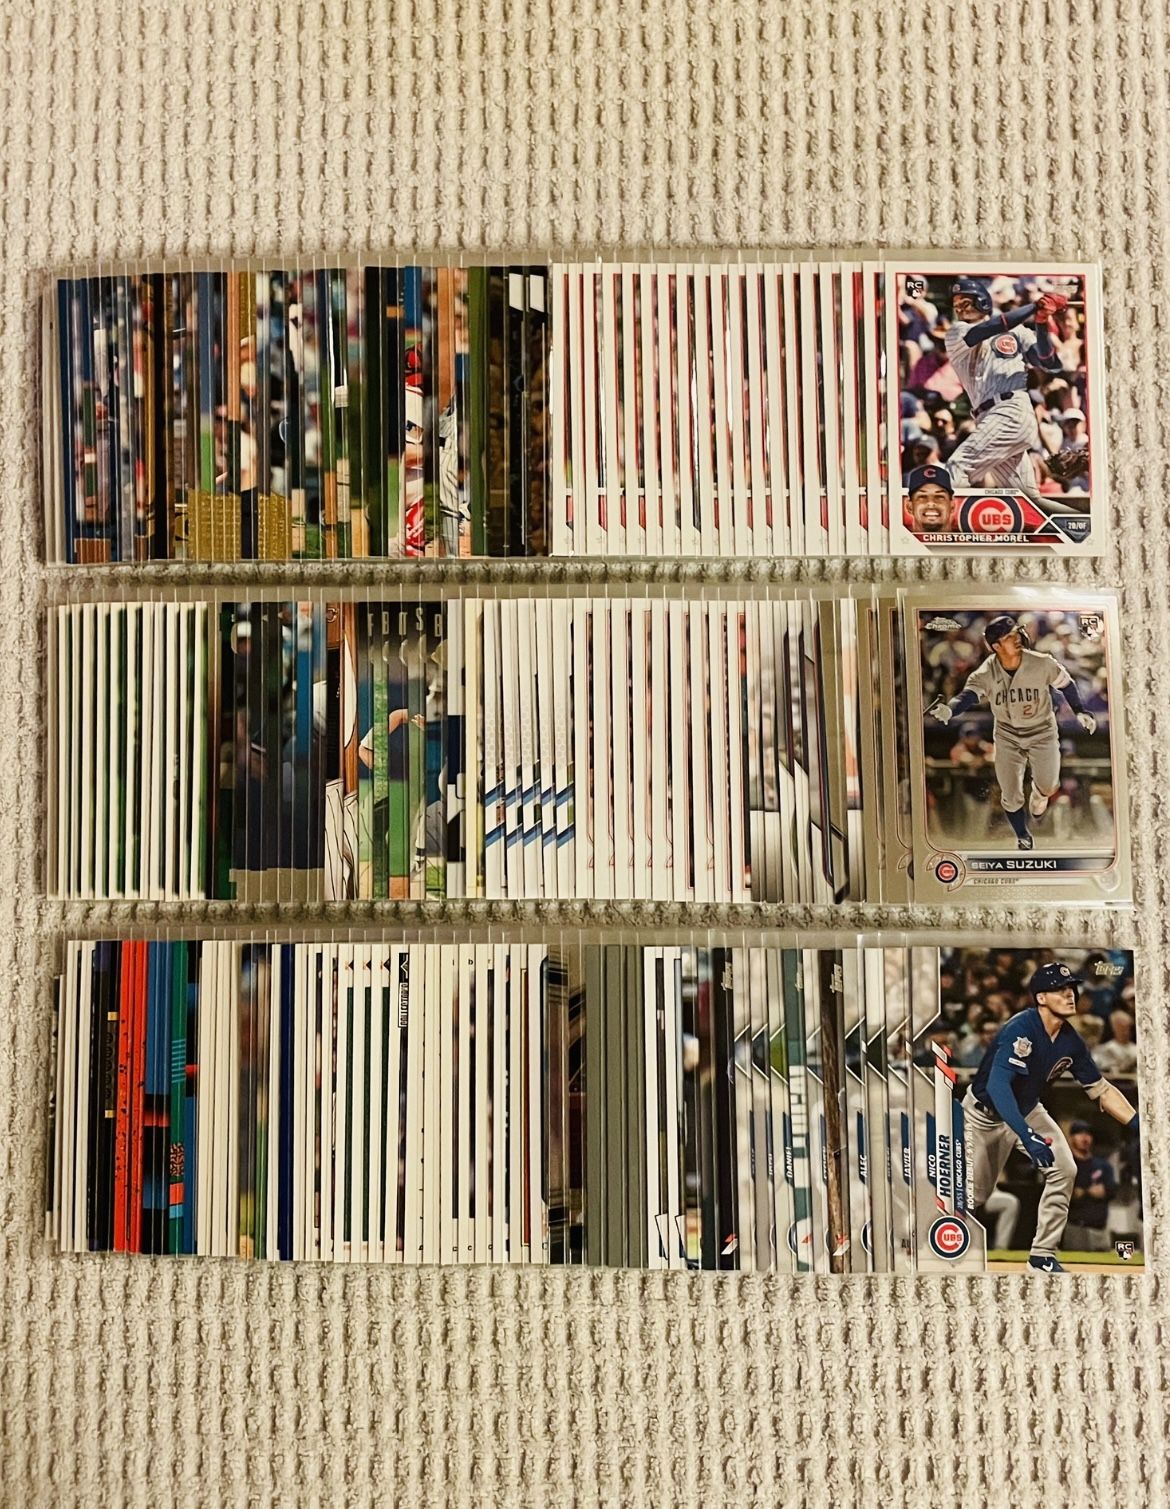 Chicago Cubs 160 Card Baseball Lot!